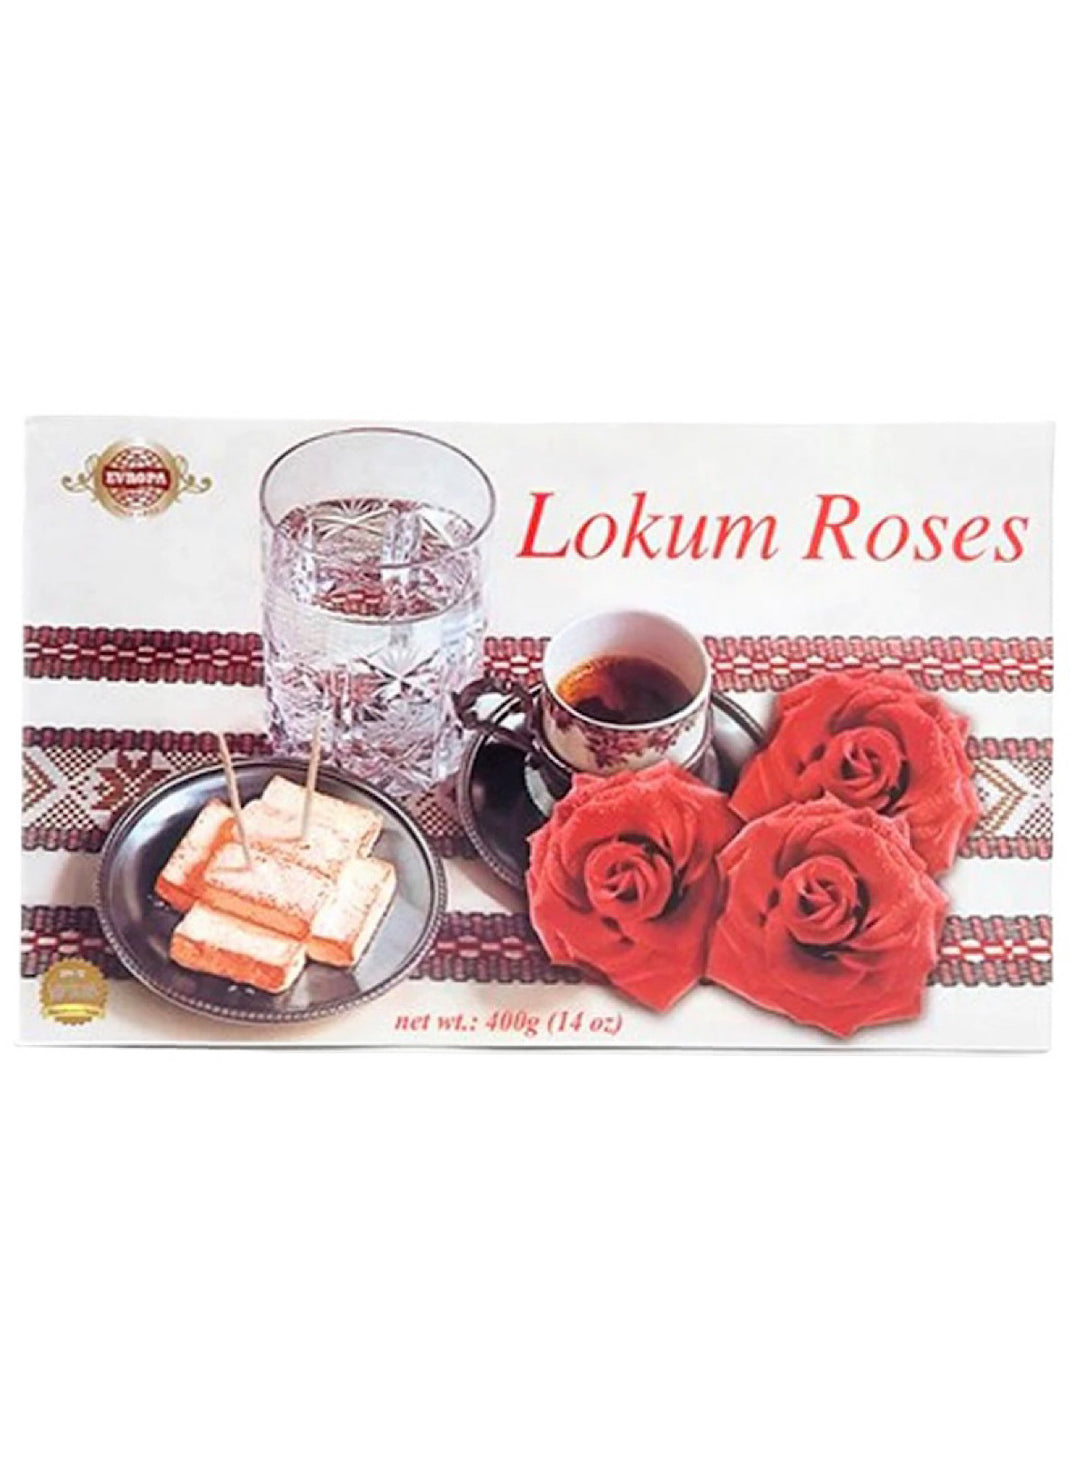 Turkish delights Lokum with Walnuts - Evropa - 400g